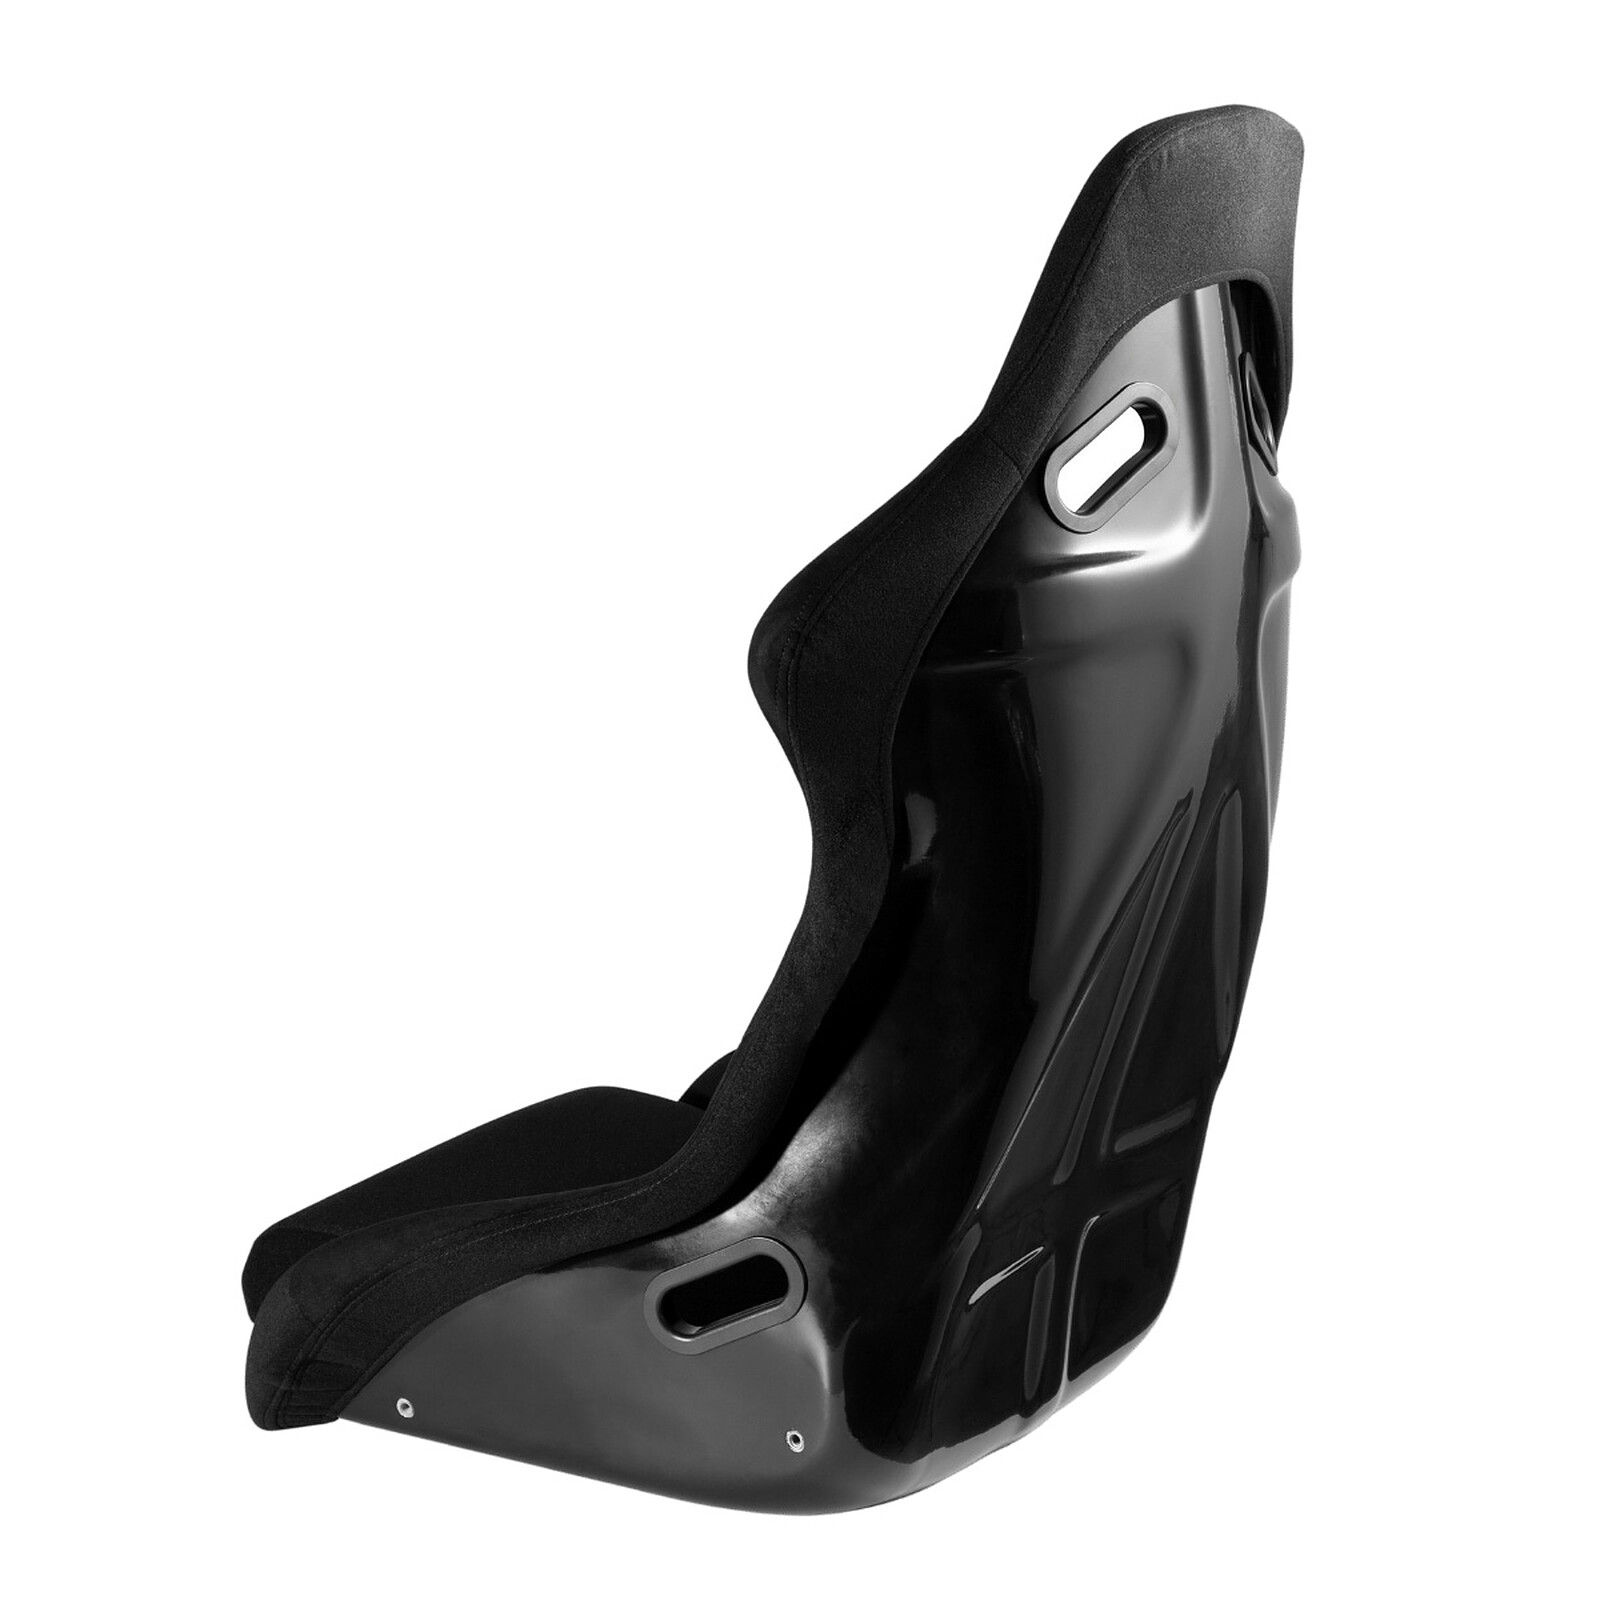 OPLITE Bucket Seat GTR - Other gaming accessories - LDLC 3-year warranty